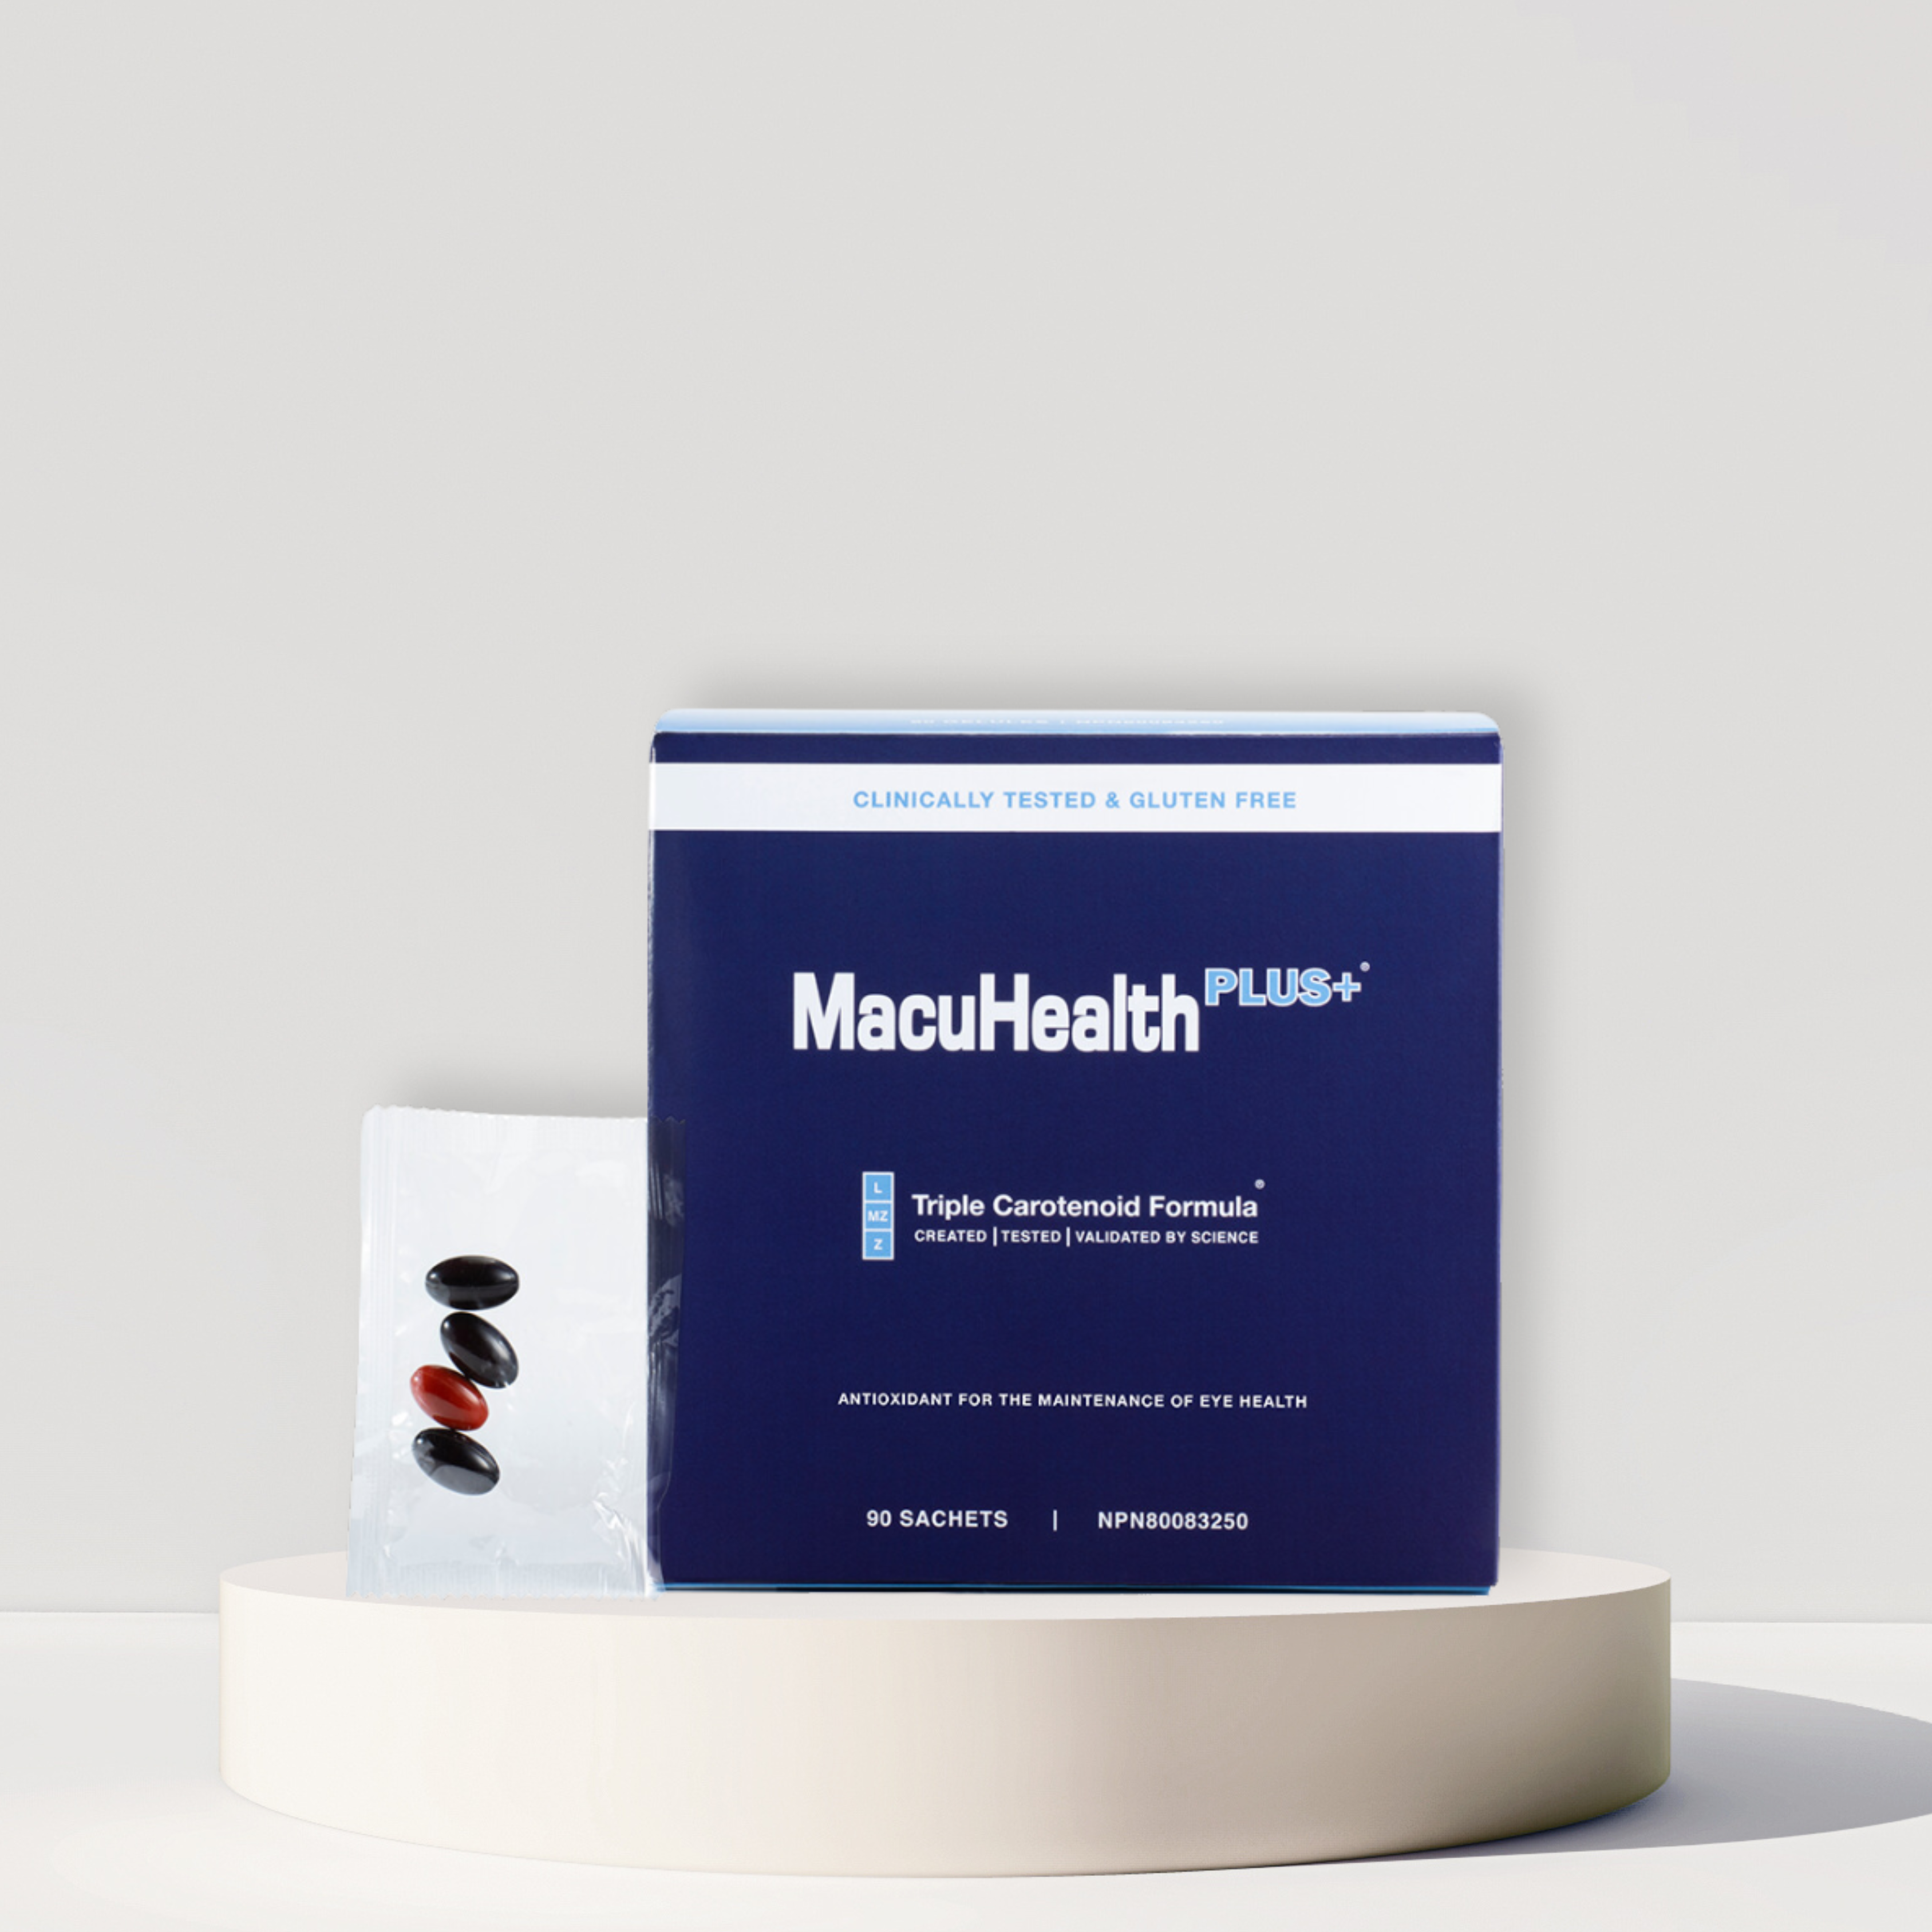 MacuHealth Plus+ (90 sachets)